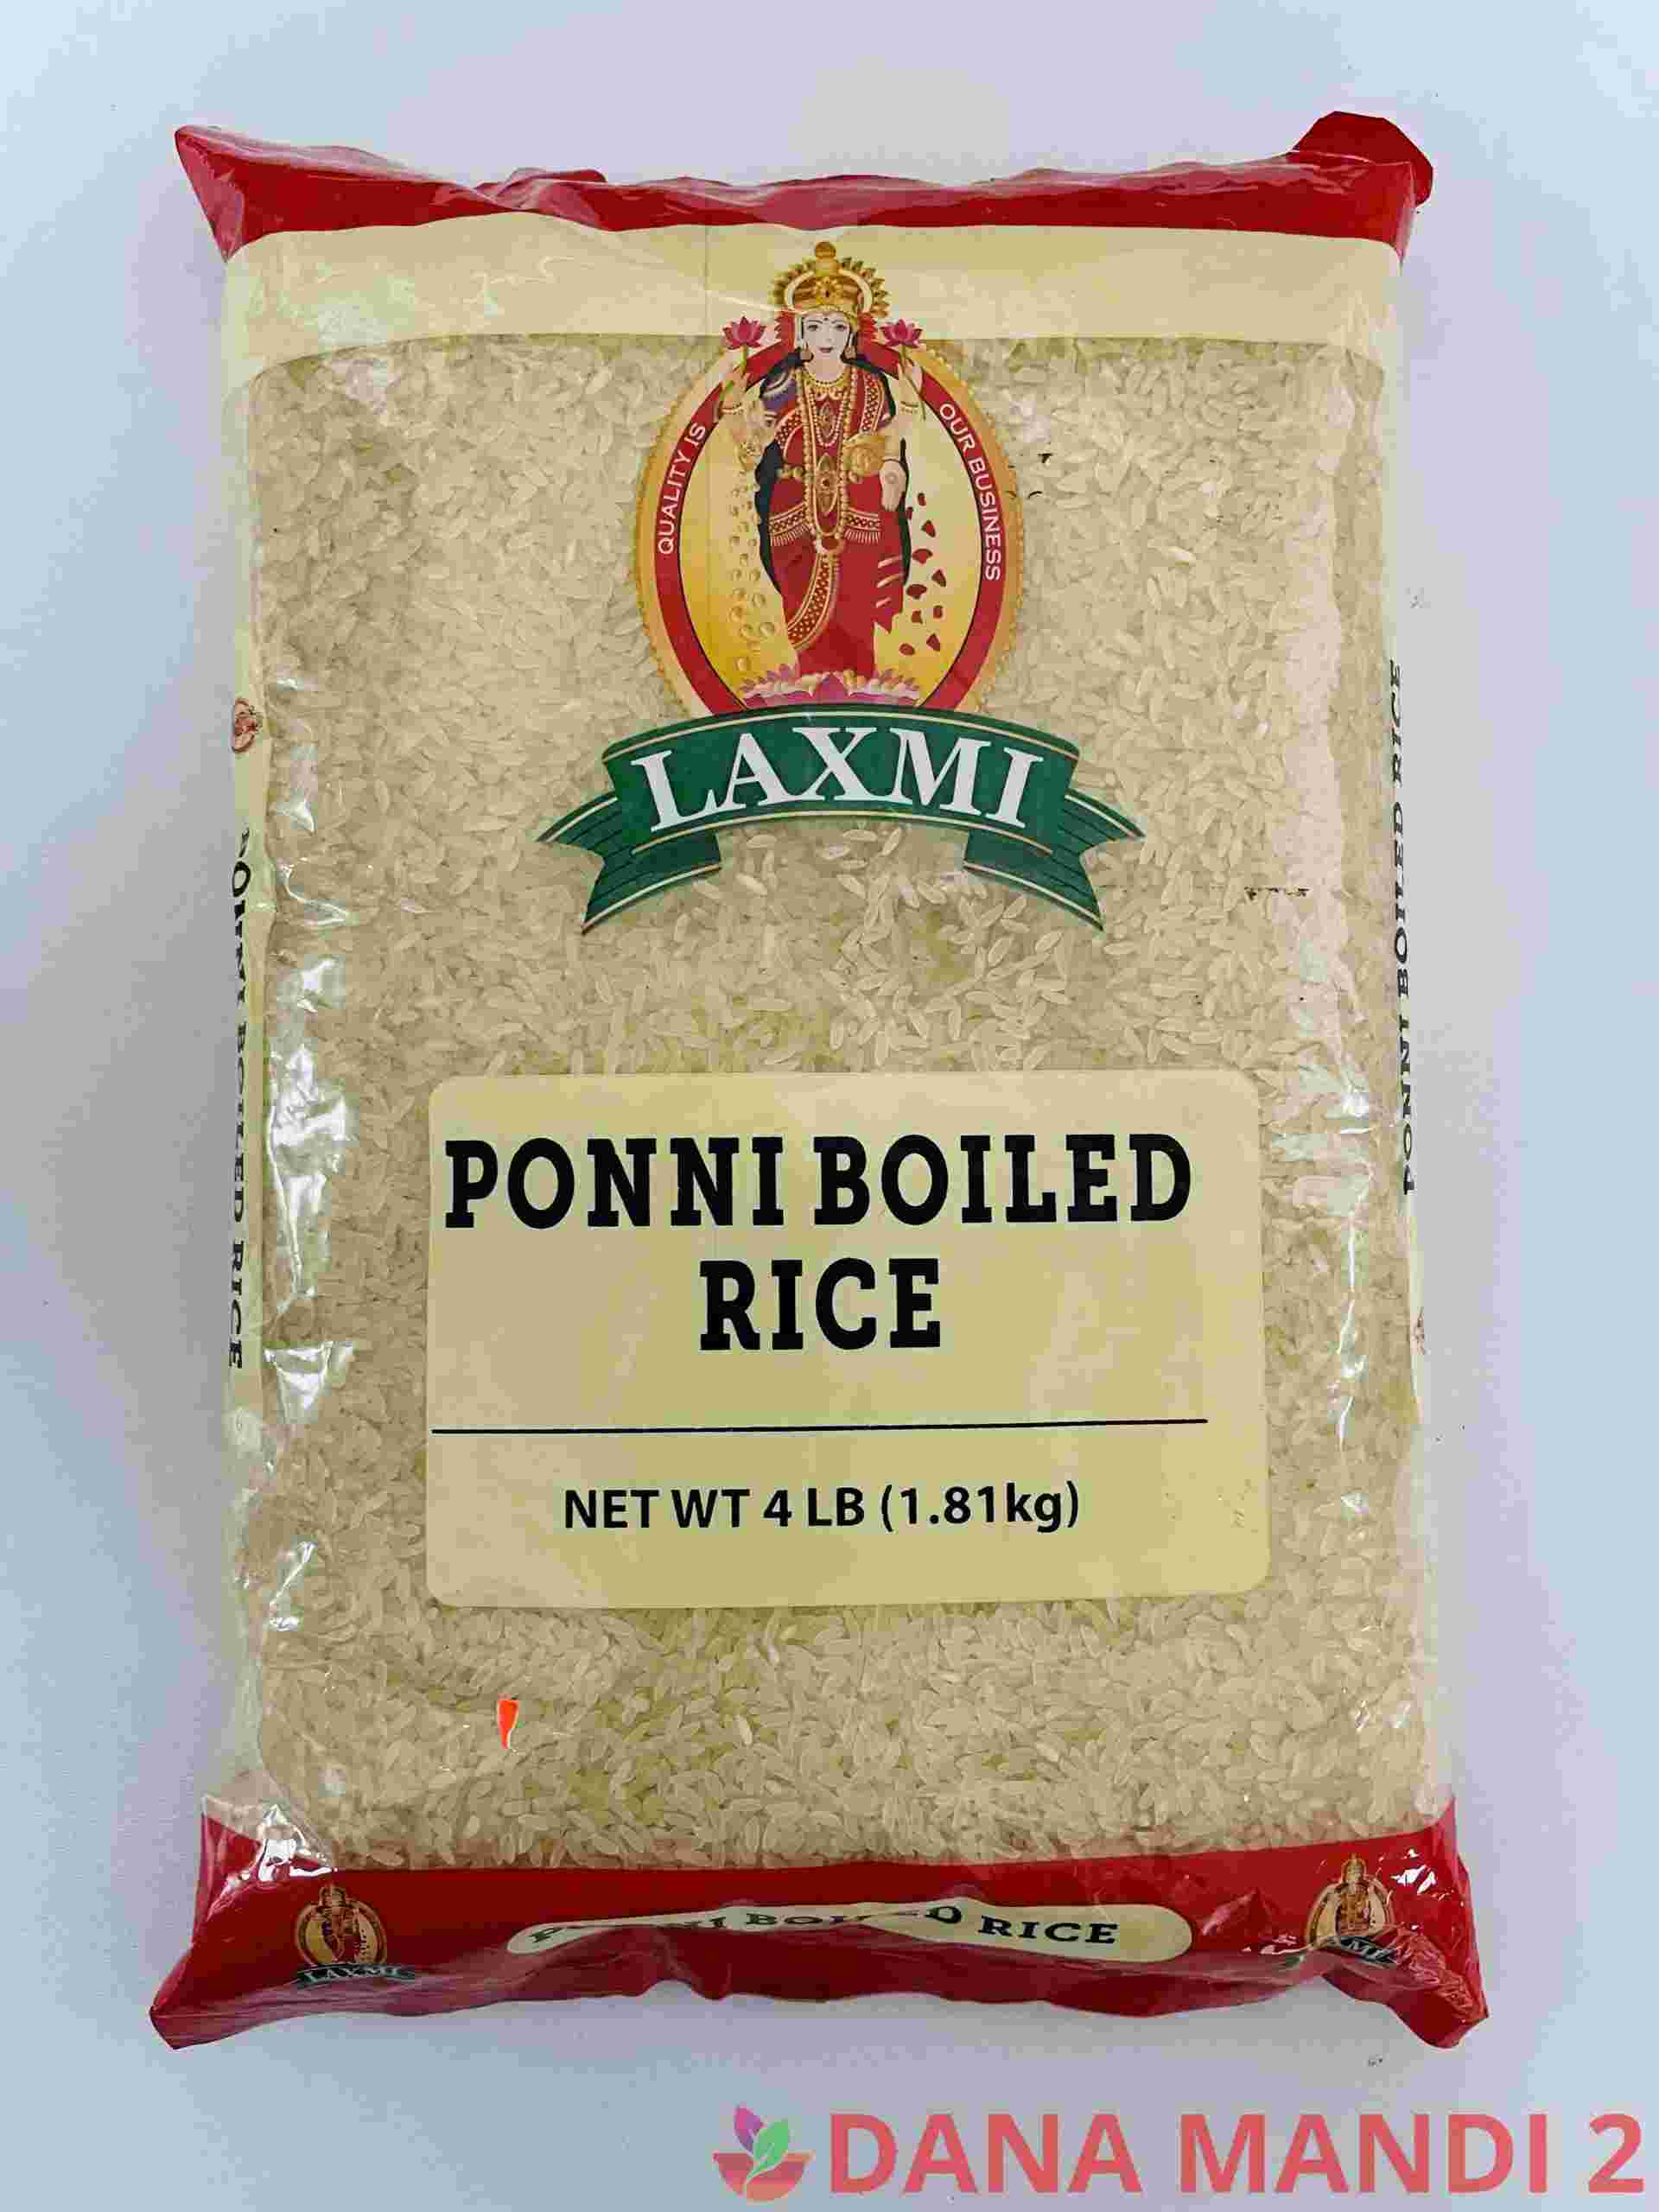 Laxmi Ponni Boiled Rice